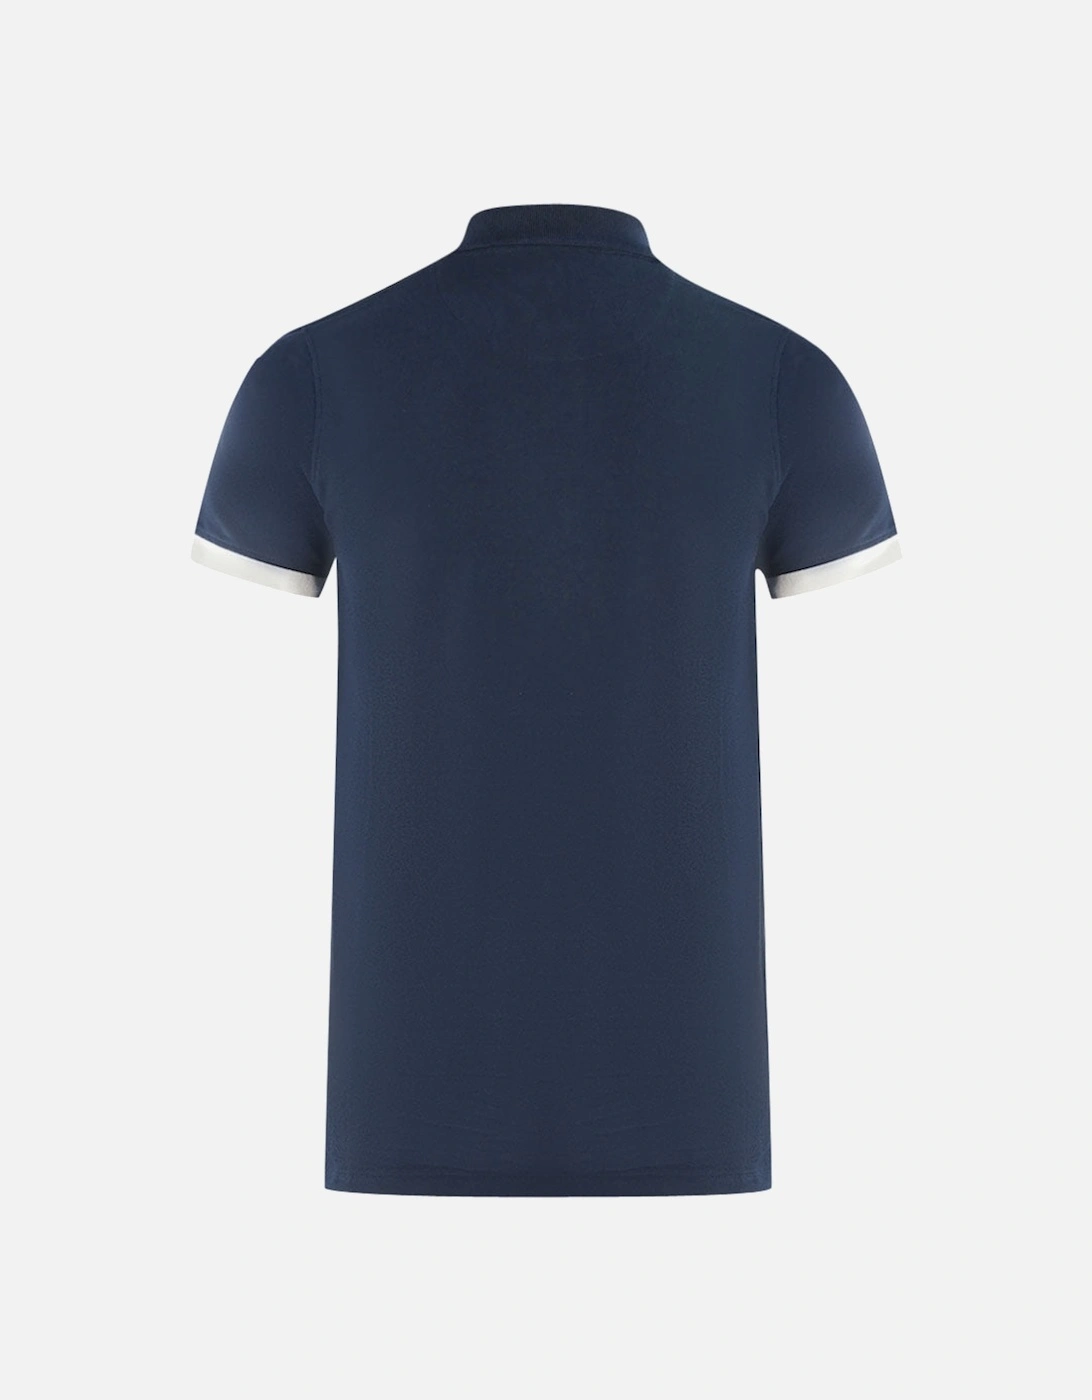 London Aldis Navy Blue Polo Shirt